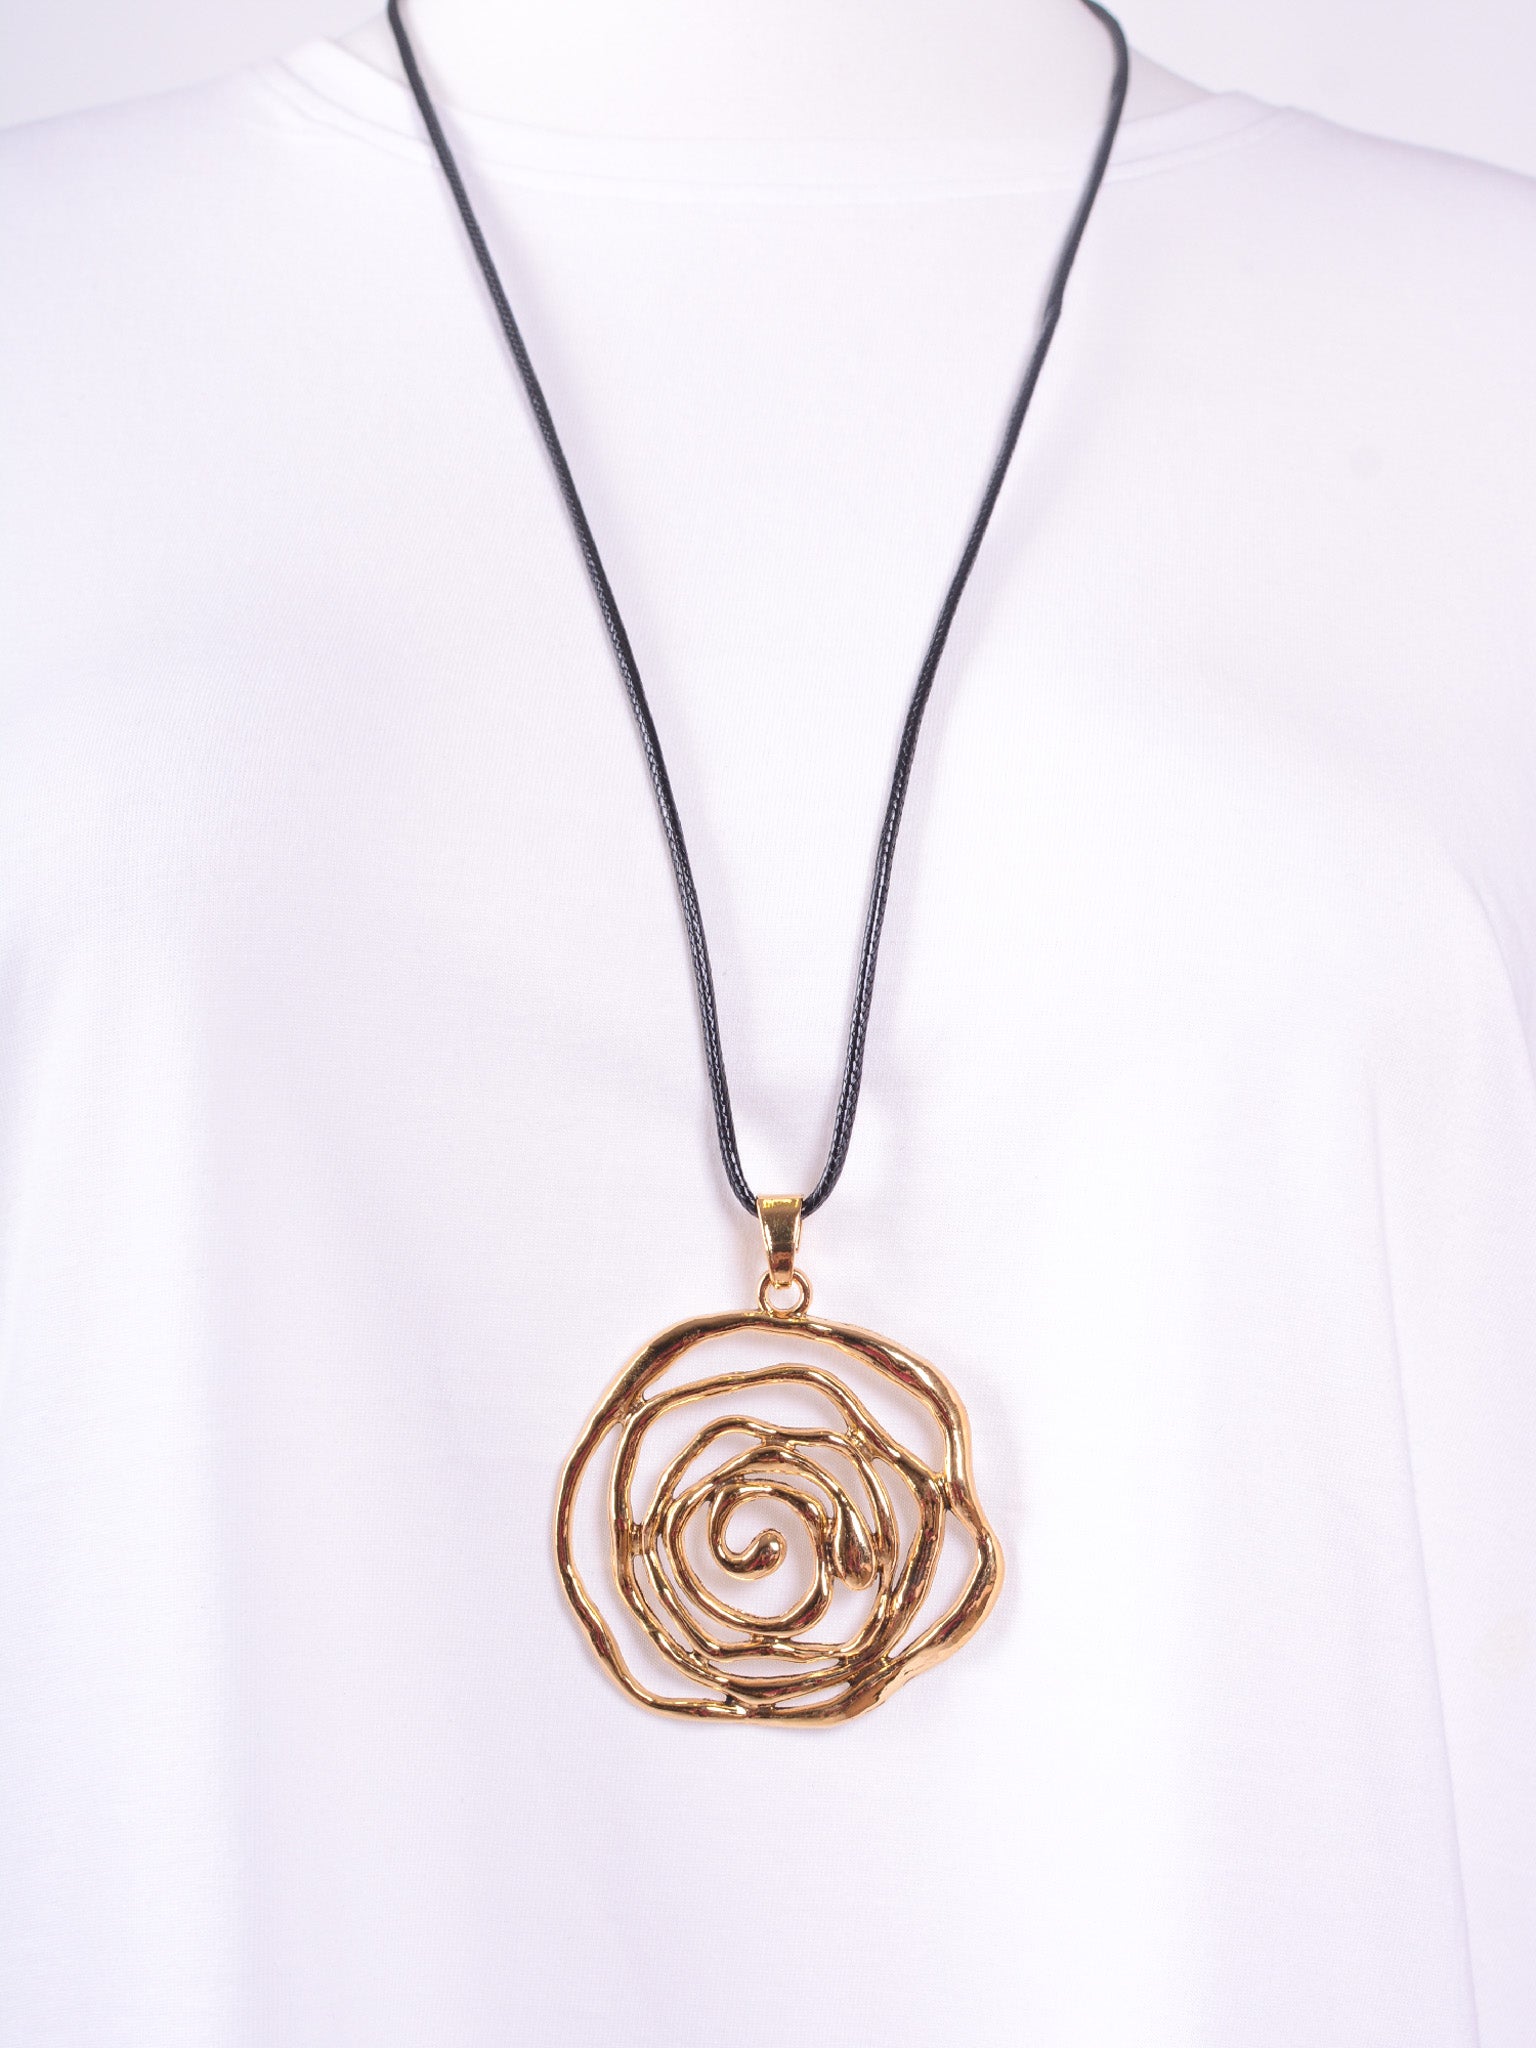 Lagenlook Rose Pendant Necklace Gold - LAGEN22, Necklaces & Pendants, Pure Plus Clothing, Lagenlook Clothing, Plus Size Fashion, Over 50 Fashion